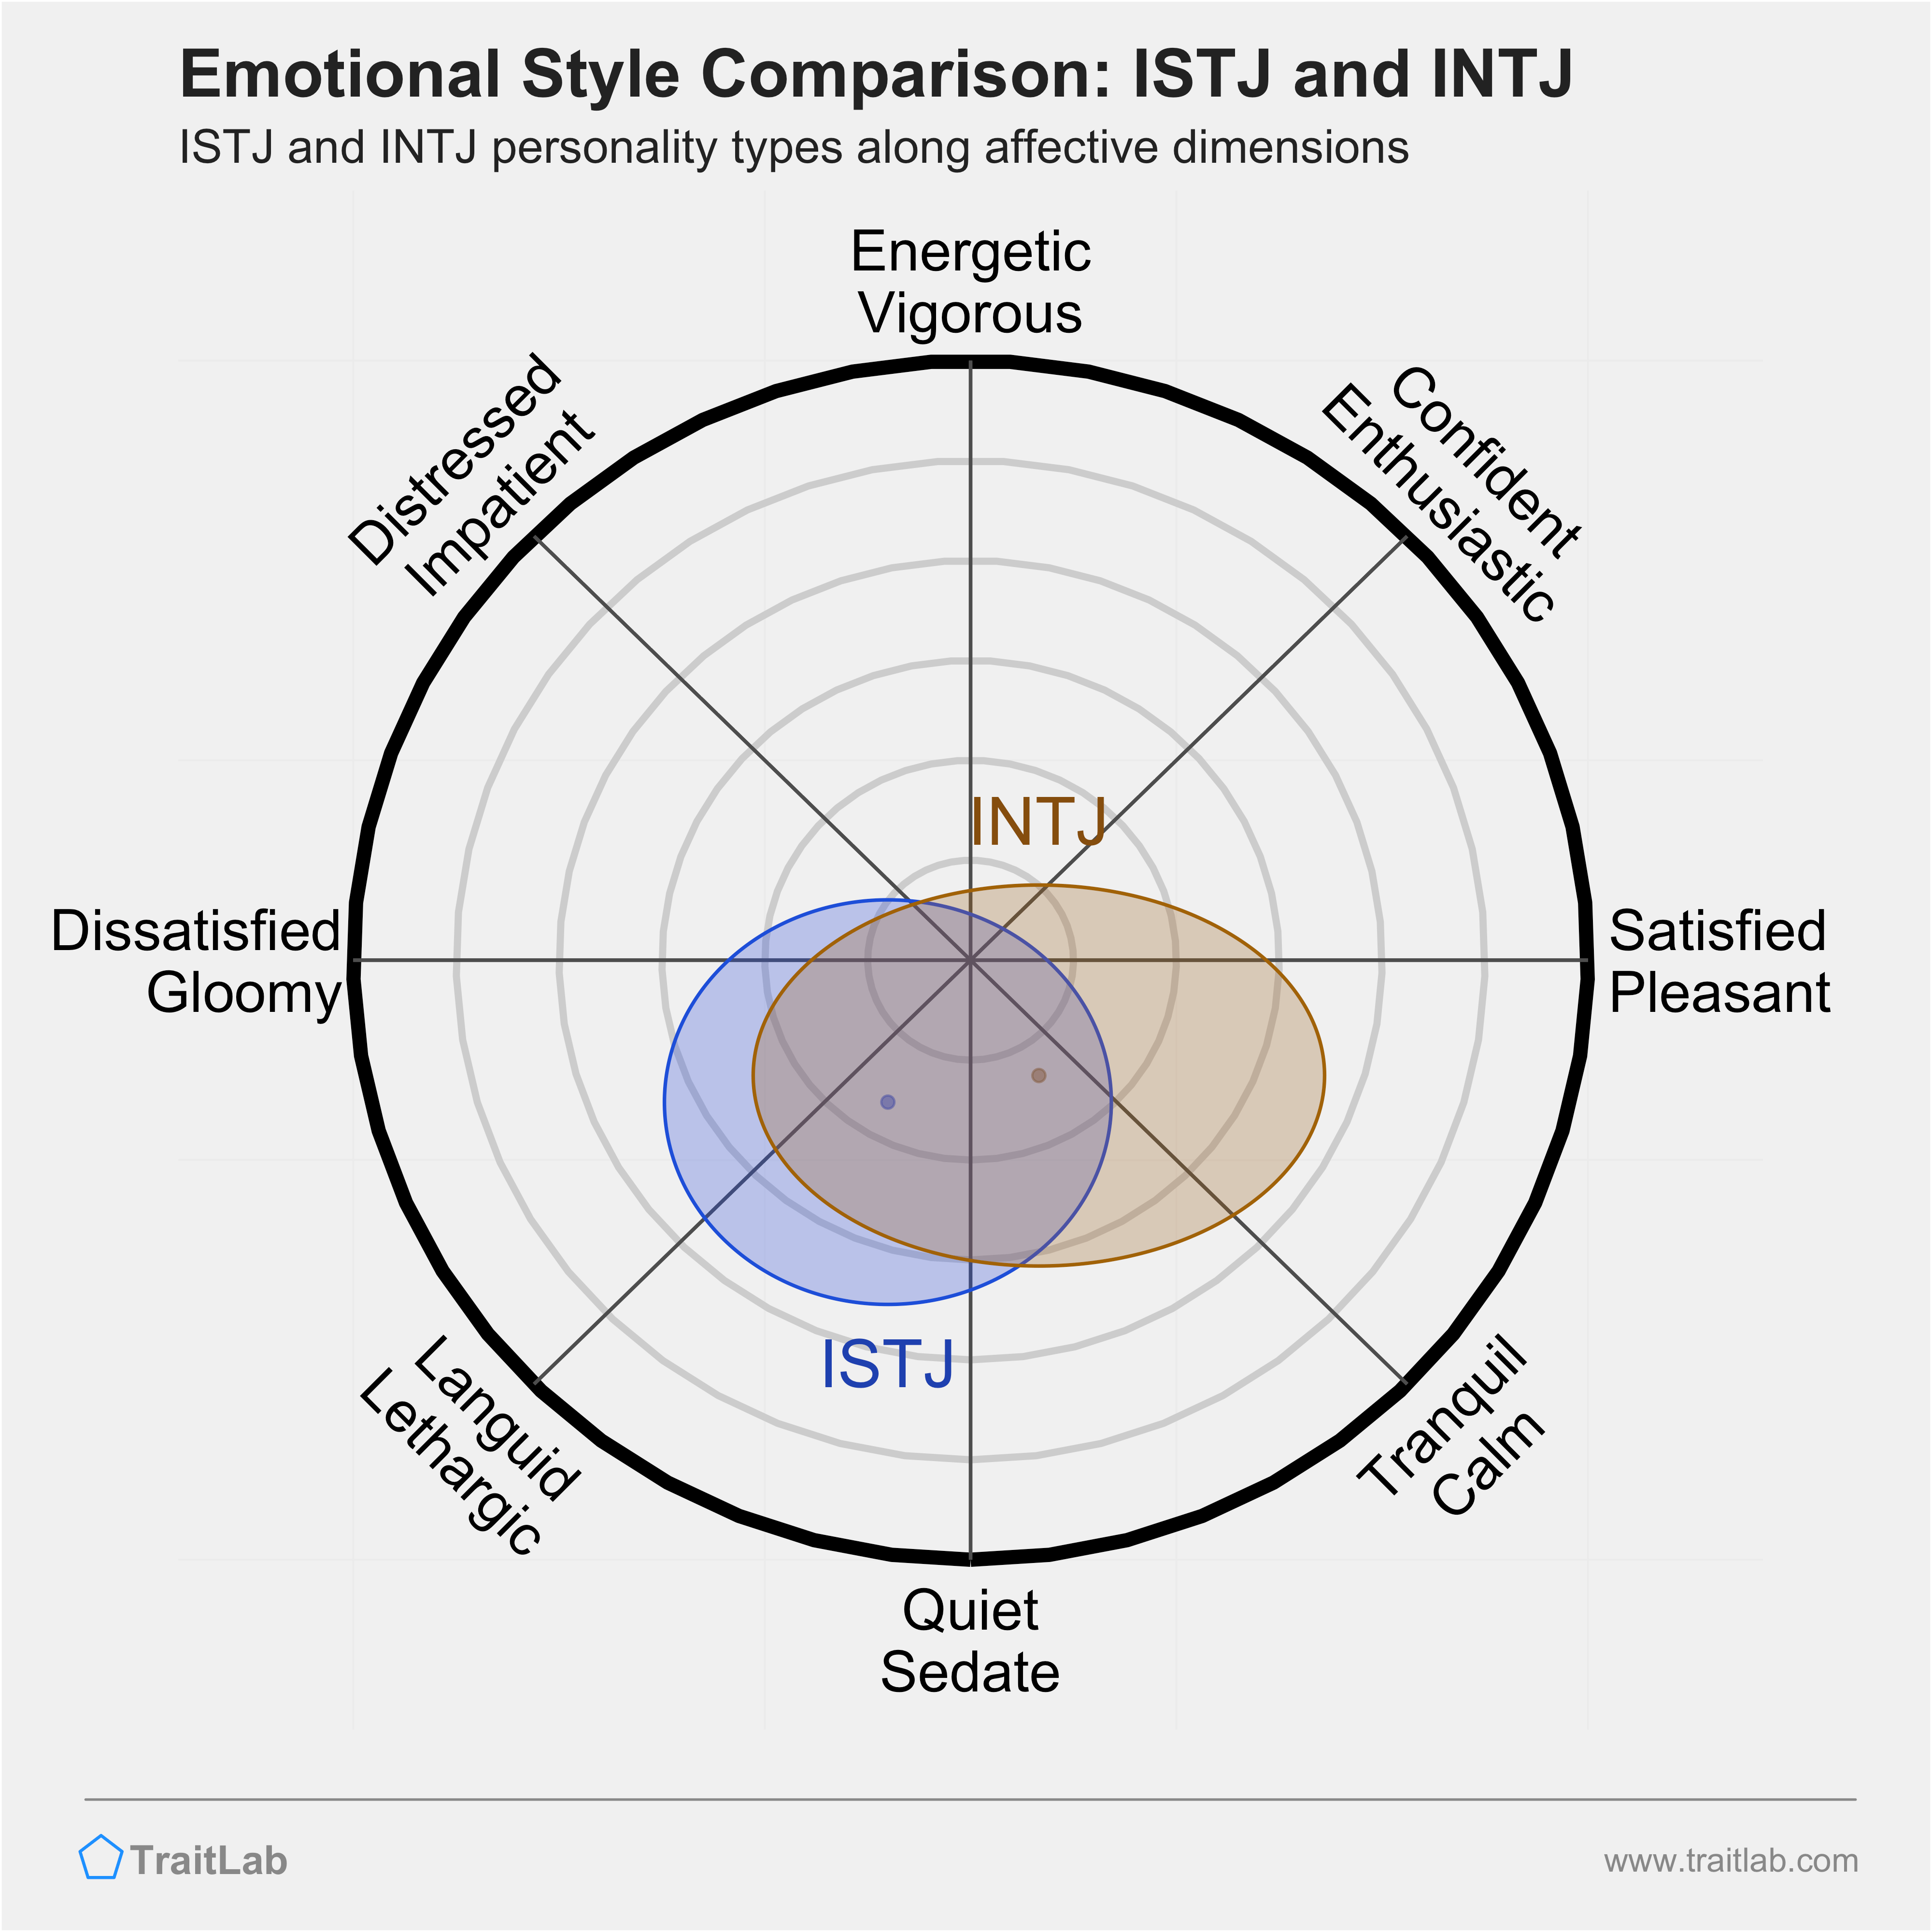 ISTJ and INTJ comparison across emotional (affective) dimensions